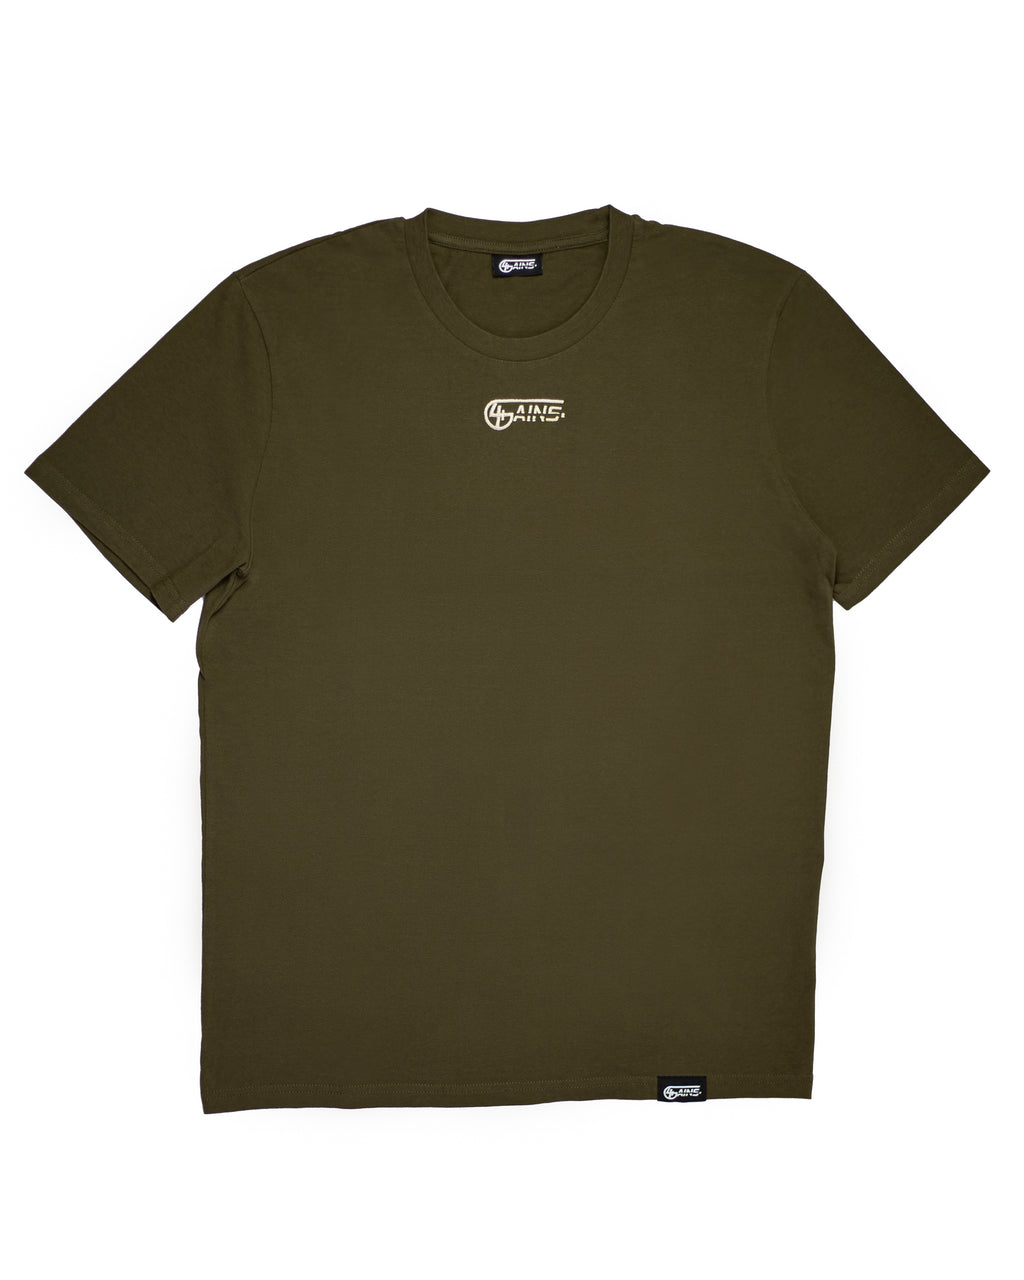 4GAINS basic unisex T-Shirt in khaki/beige